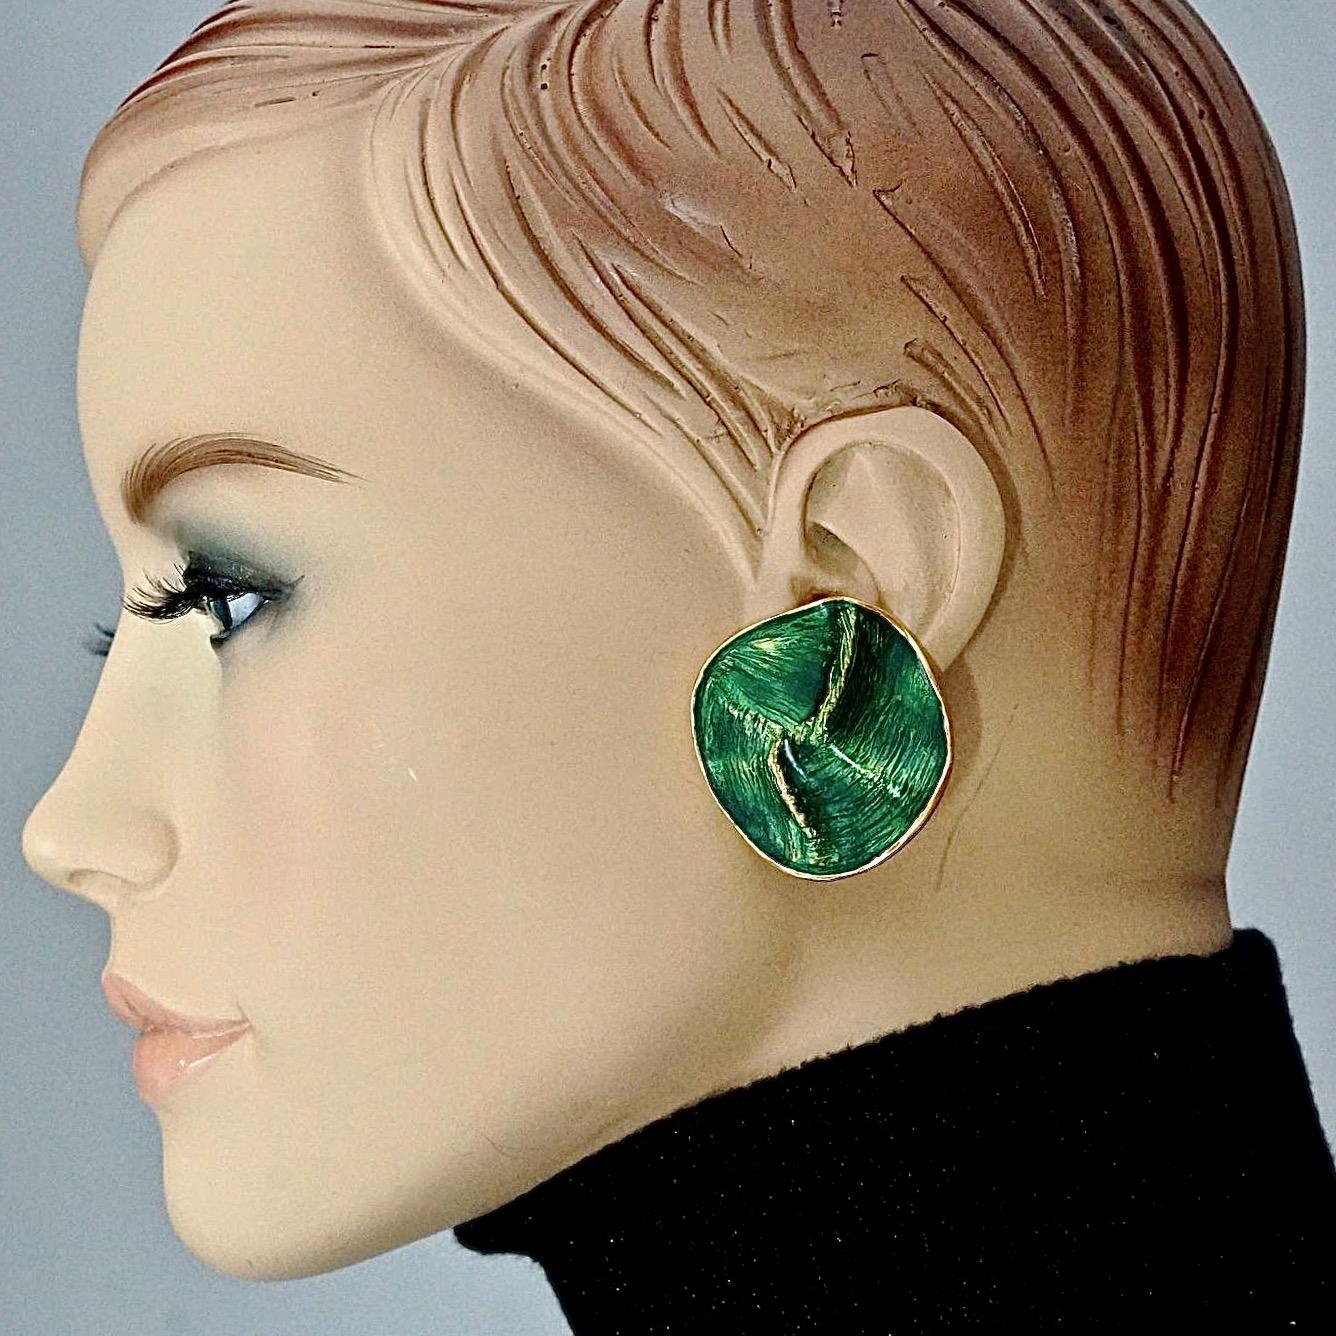 Vintage YVES SAINT LAURENT by Robert Goossens Wrinkled Enamel Disc Earrings

Measurements:
Height: 1.45 inches (3.7 cm)
Width: 1.45 inches (3.7 cm)
Weight per Earring: 13 grams

Features:
- 100% Authentic YVES SAINT LAURENT by Robert Goossens .
-